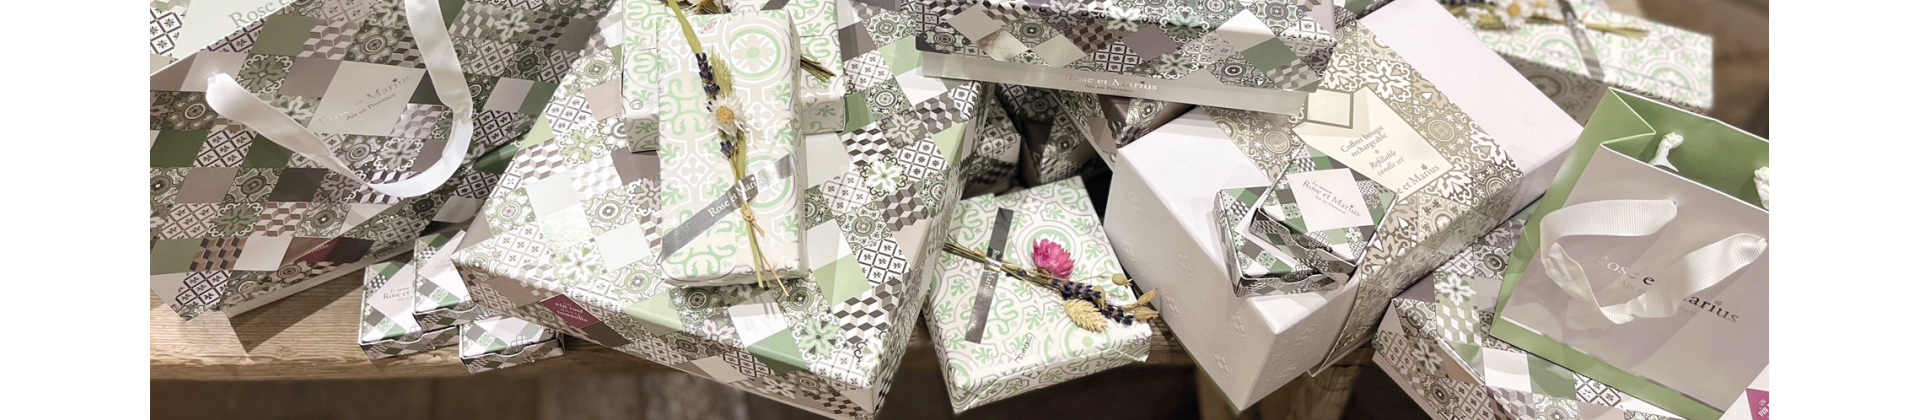 Gift Ideas Boxes